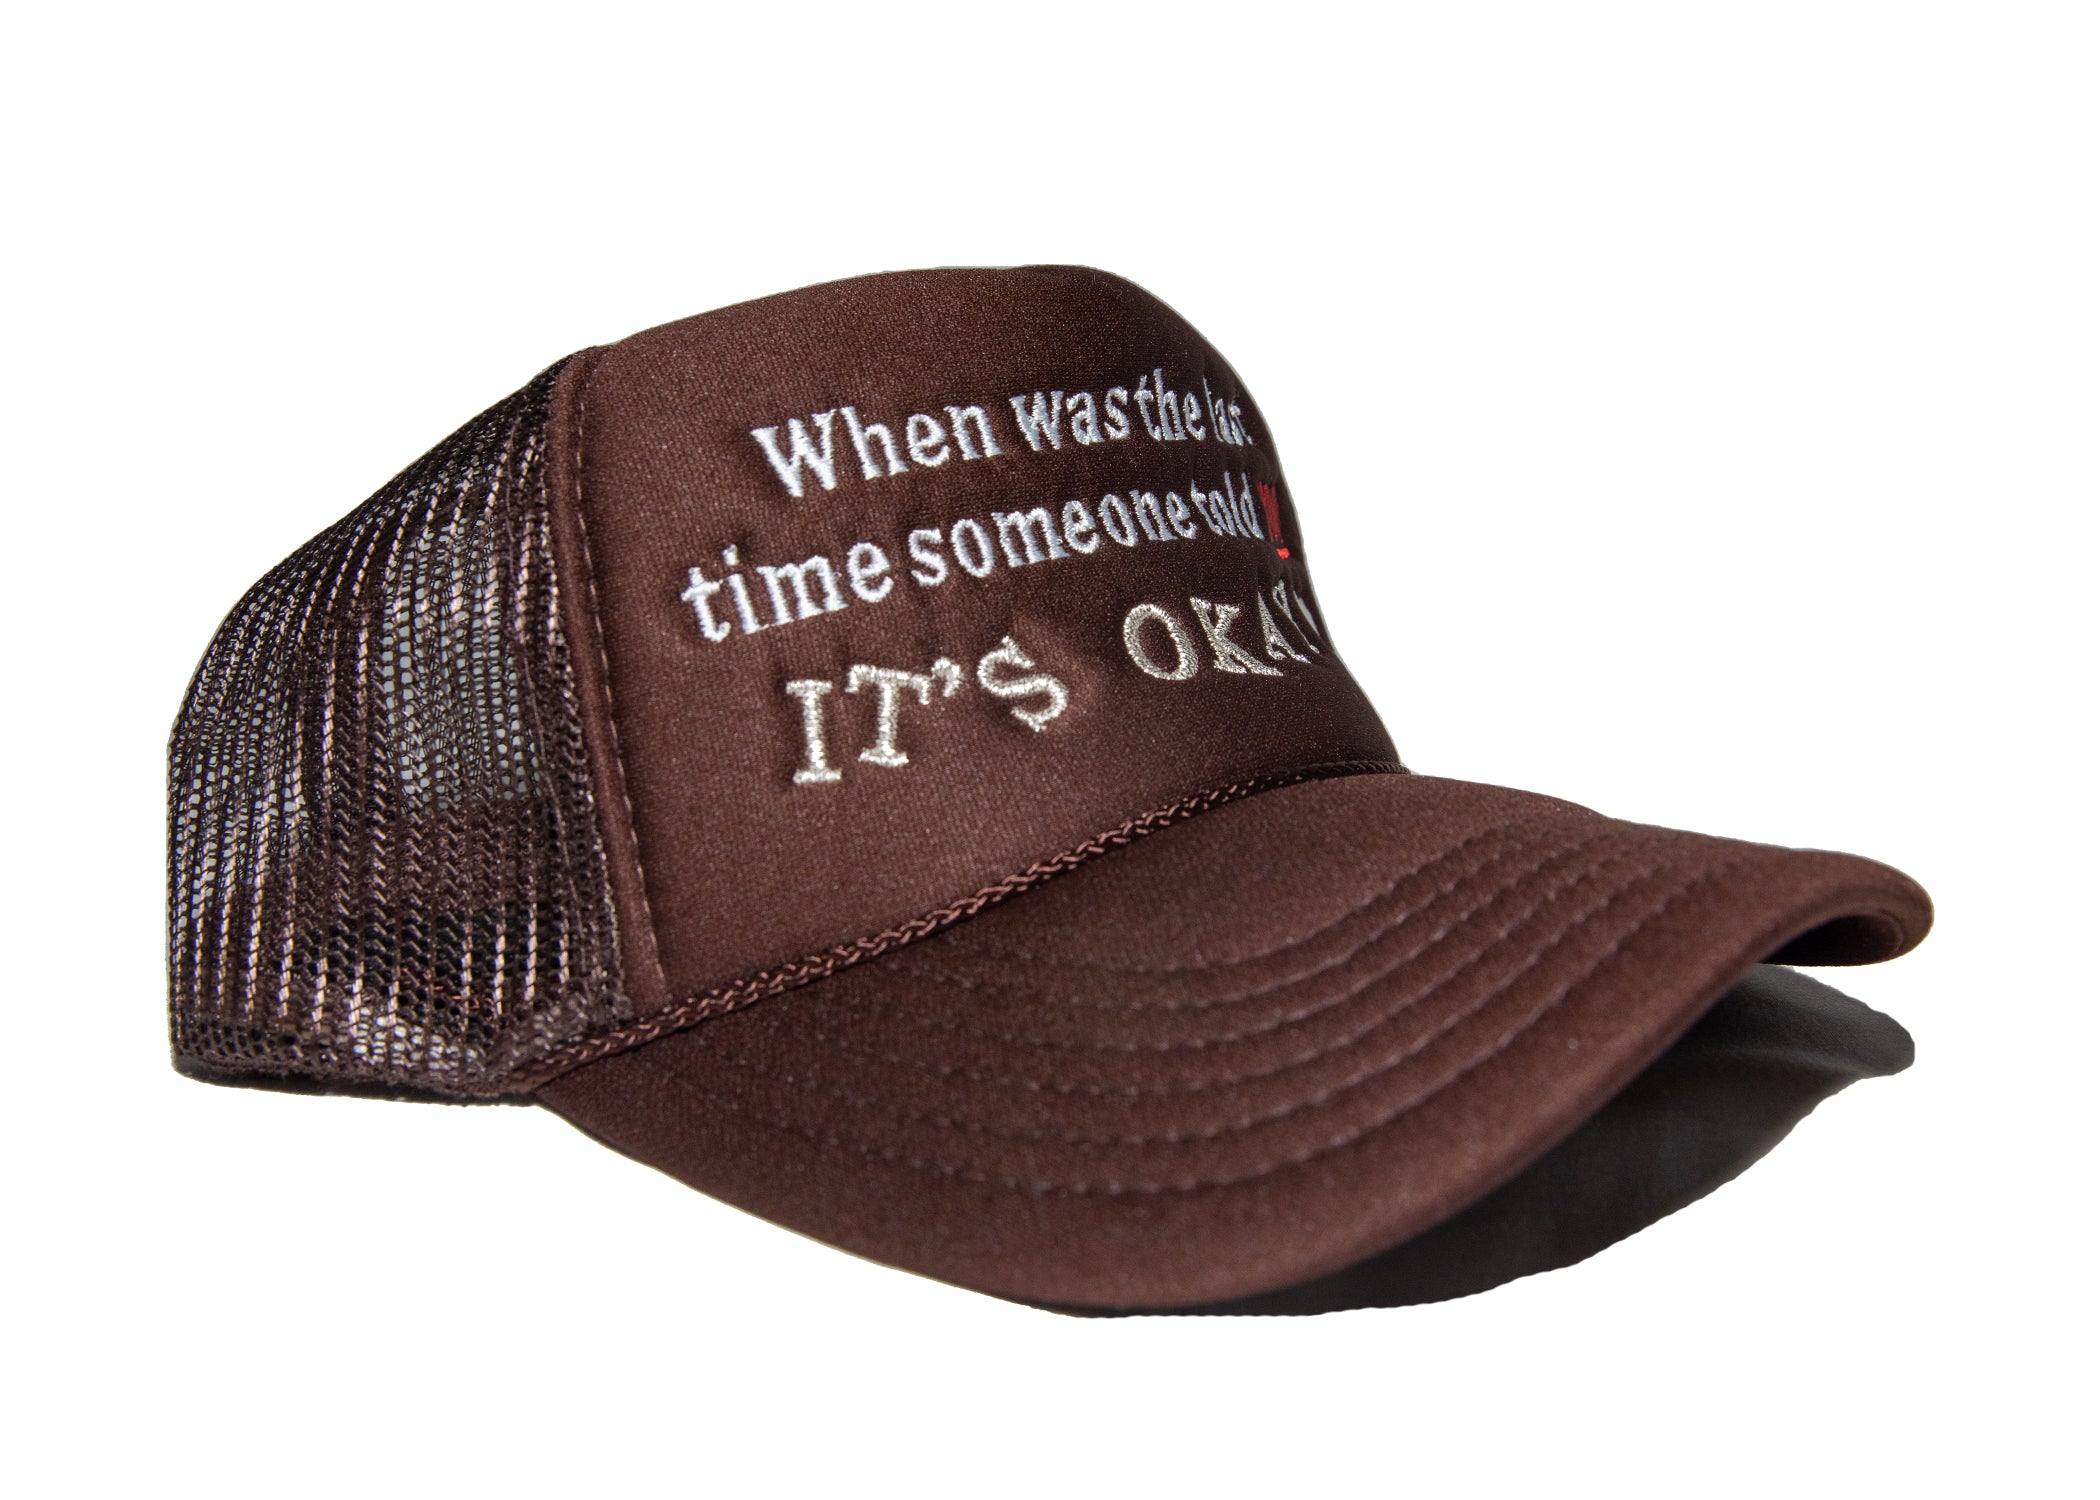 ITSOKAY Reminder Trucker Hat